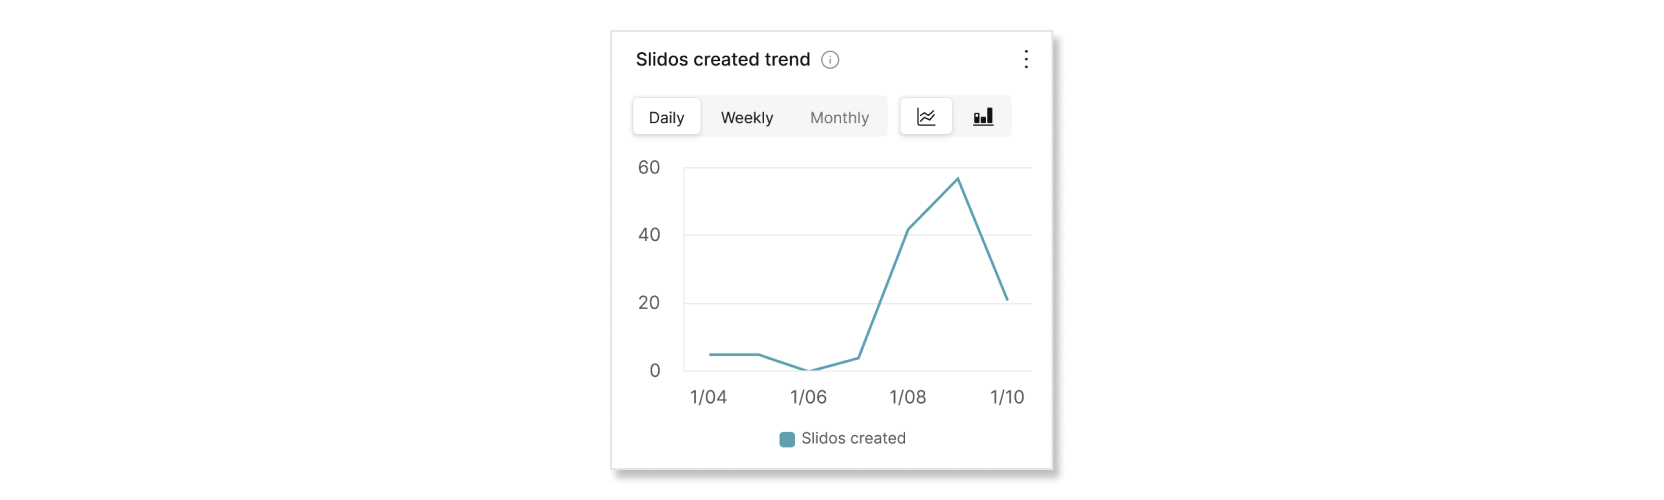 Slidos created trend chart in Control Hub Slido analytics